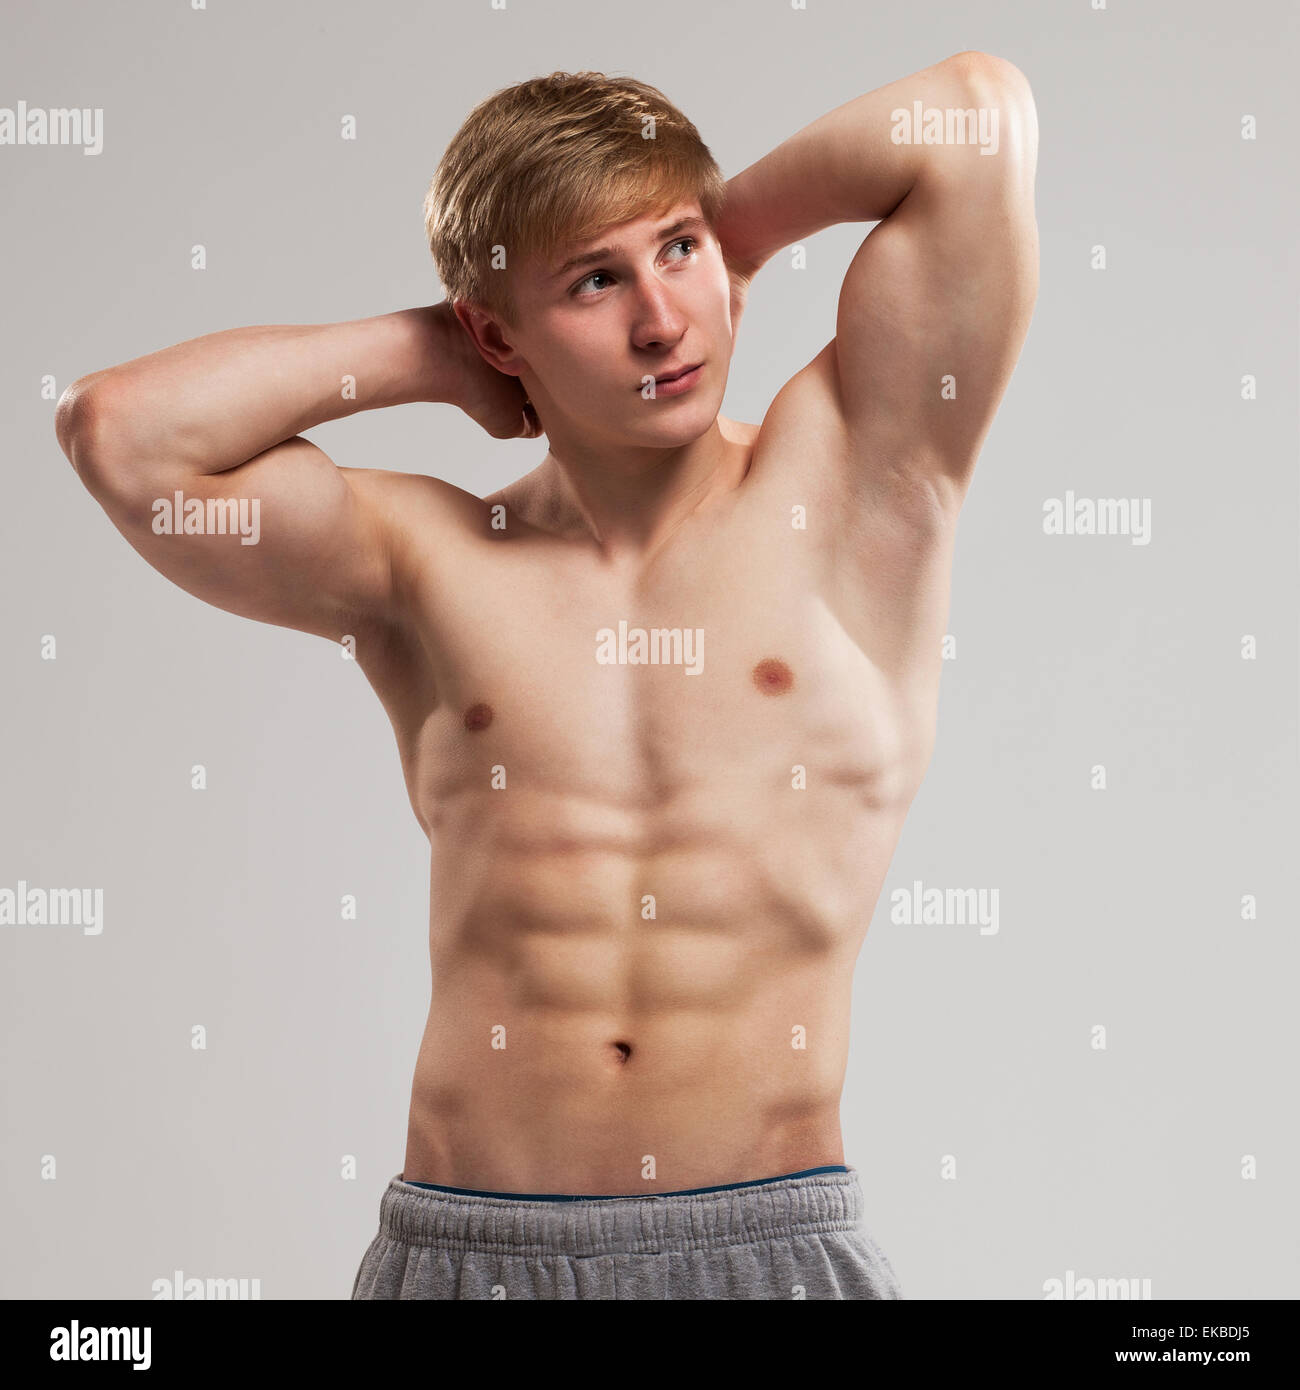 Hübscher Kerl posiert mit nackten Oberkörper Stockfotografie Alamy